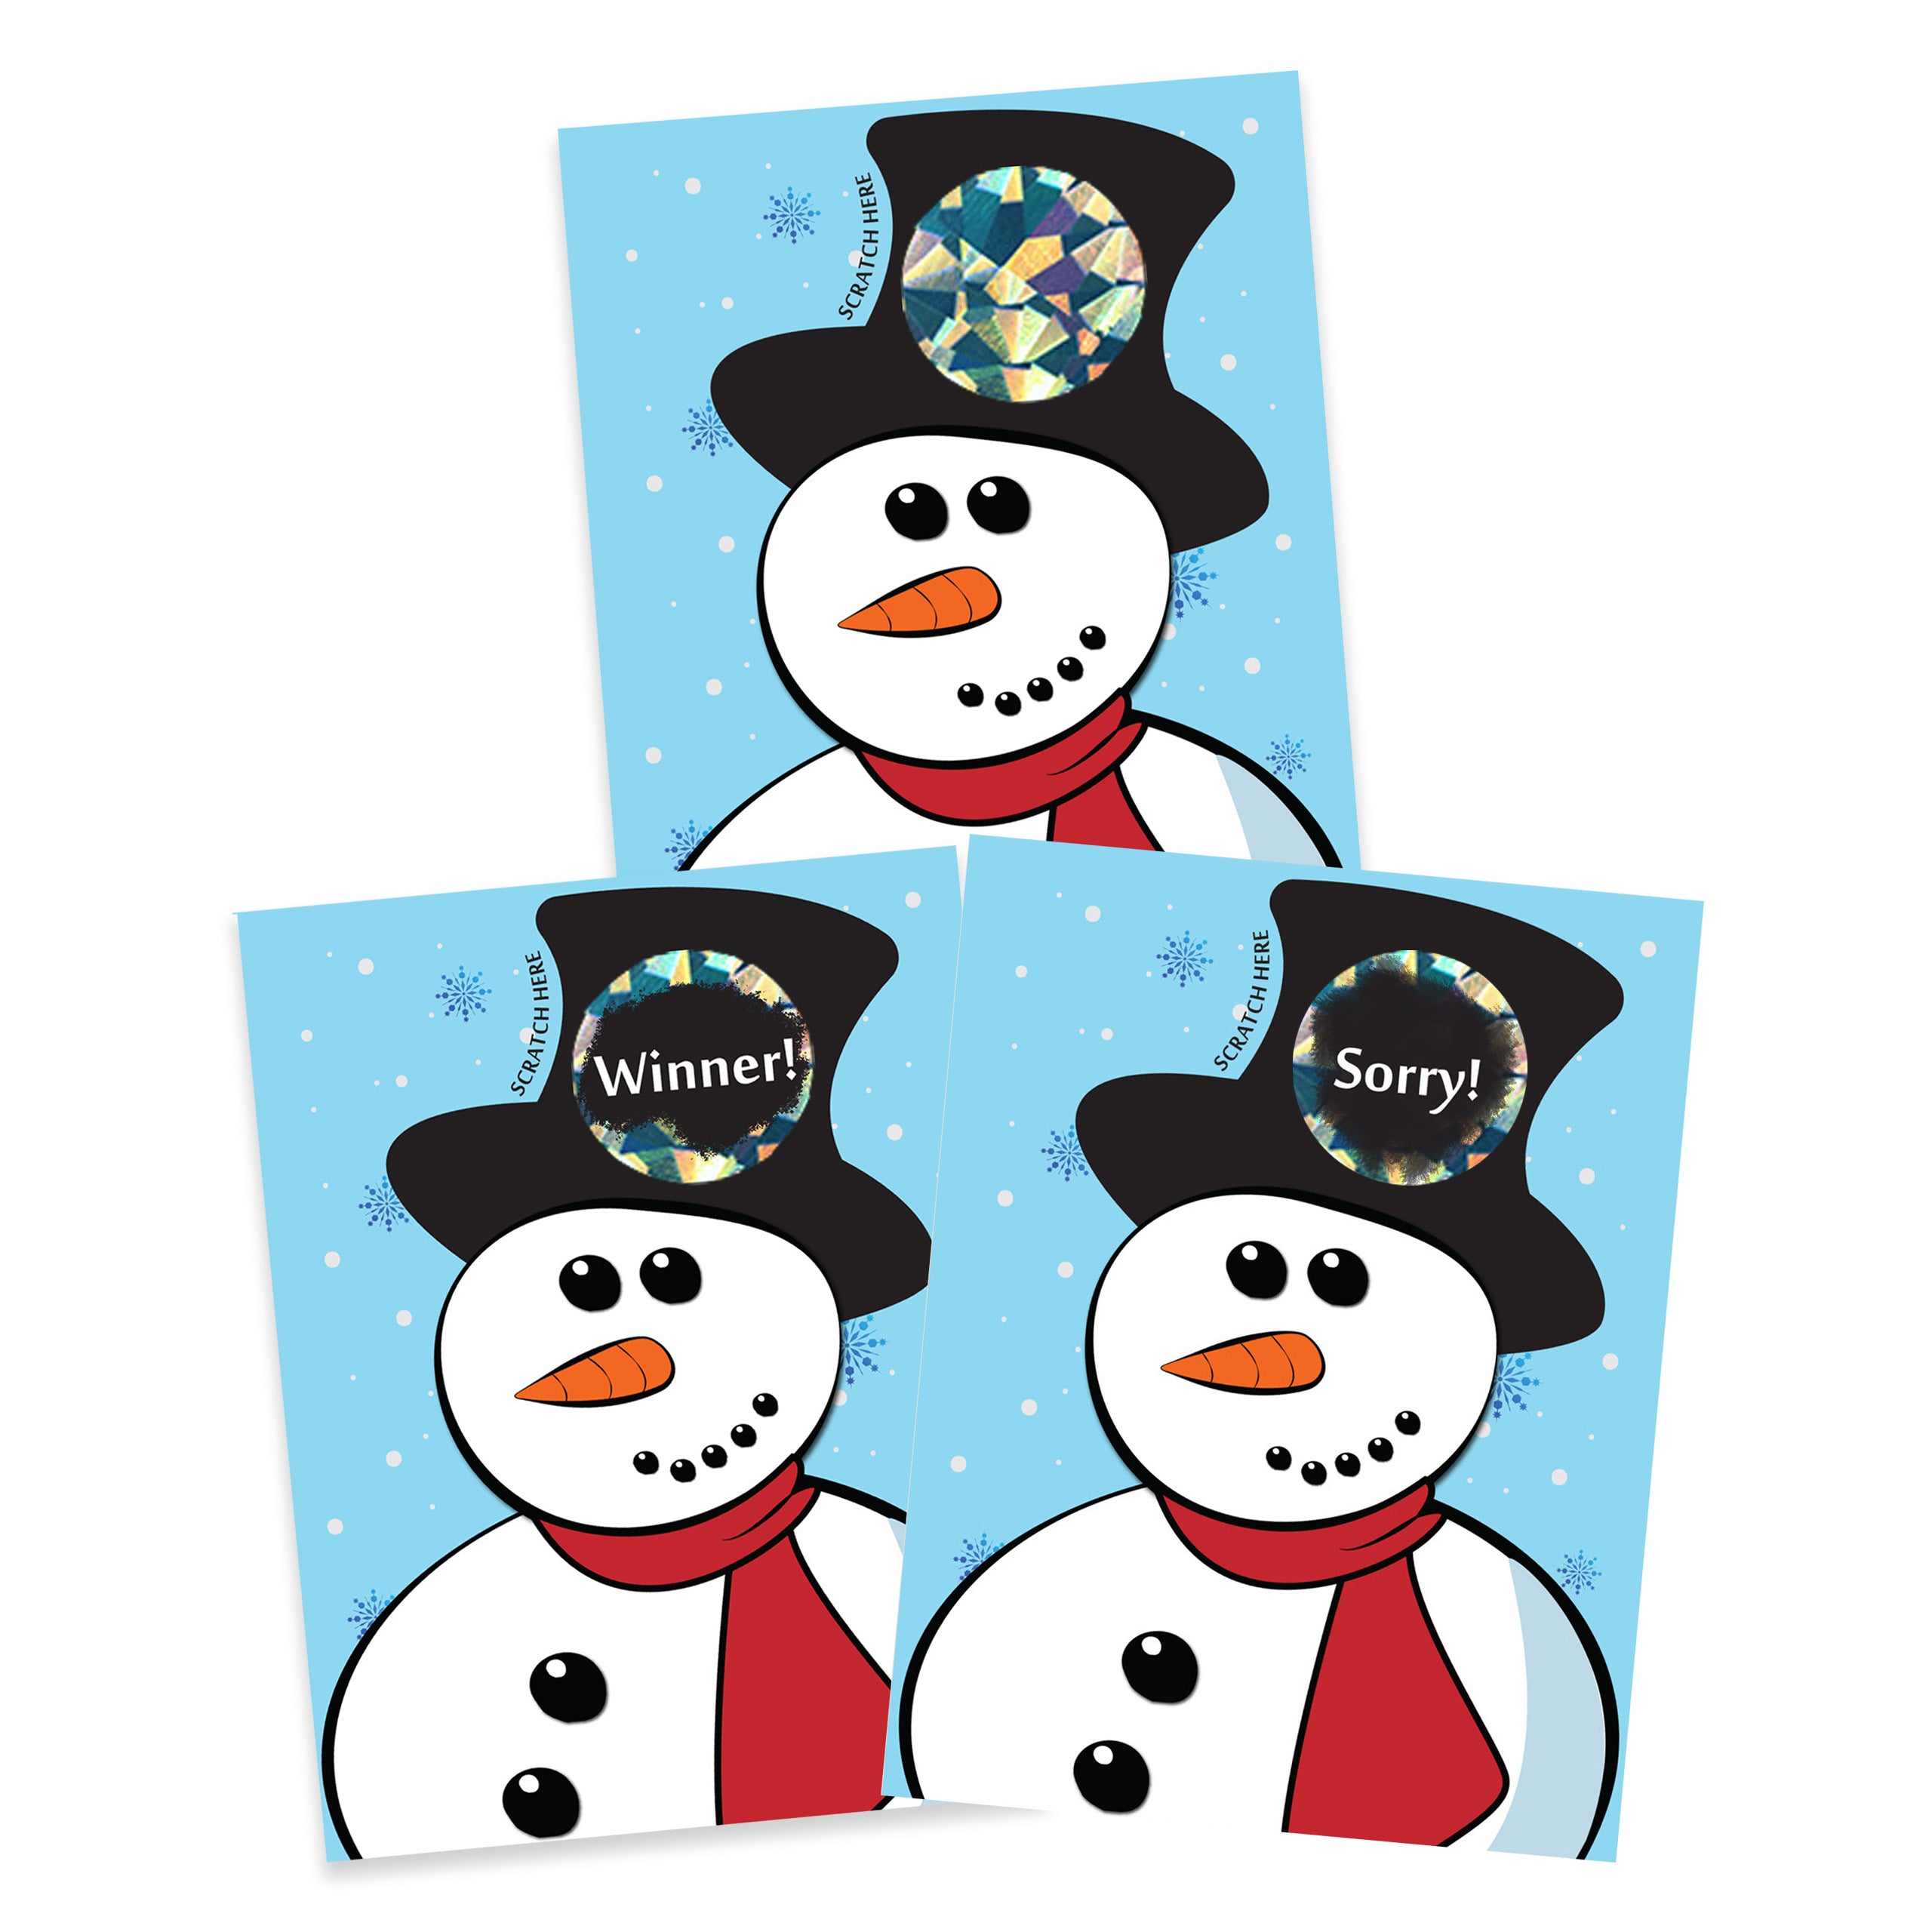 Snowman Scratch Off Game Card 26 Pack - 2 Winning and 24 Non-Winning Cards - My Scratch Offs